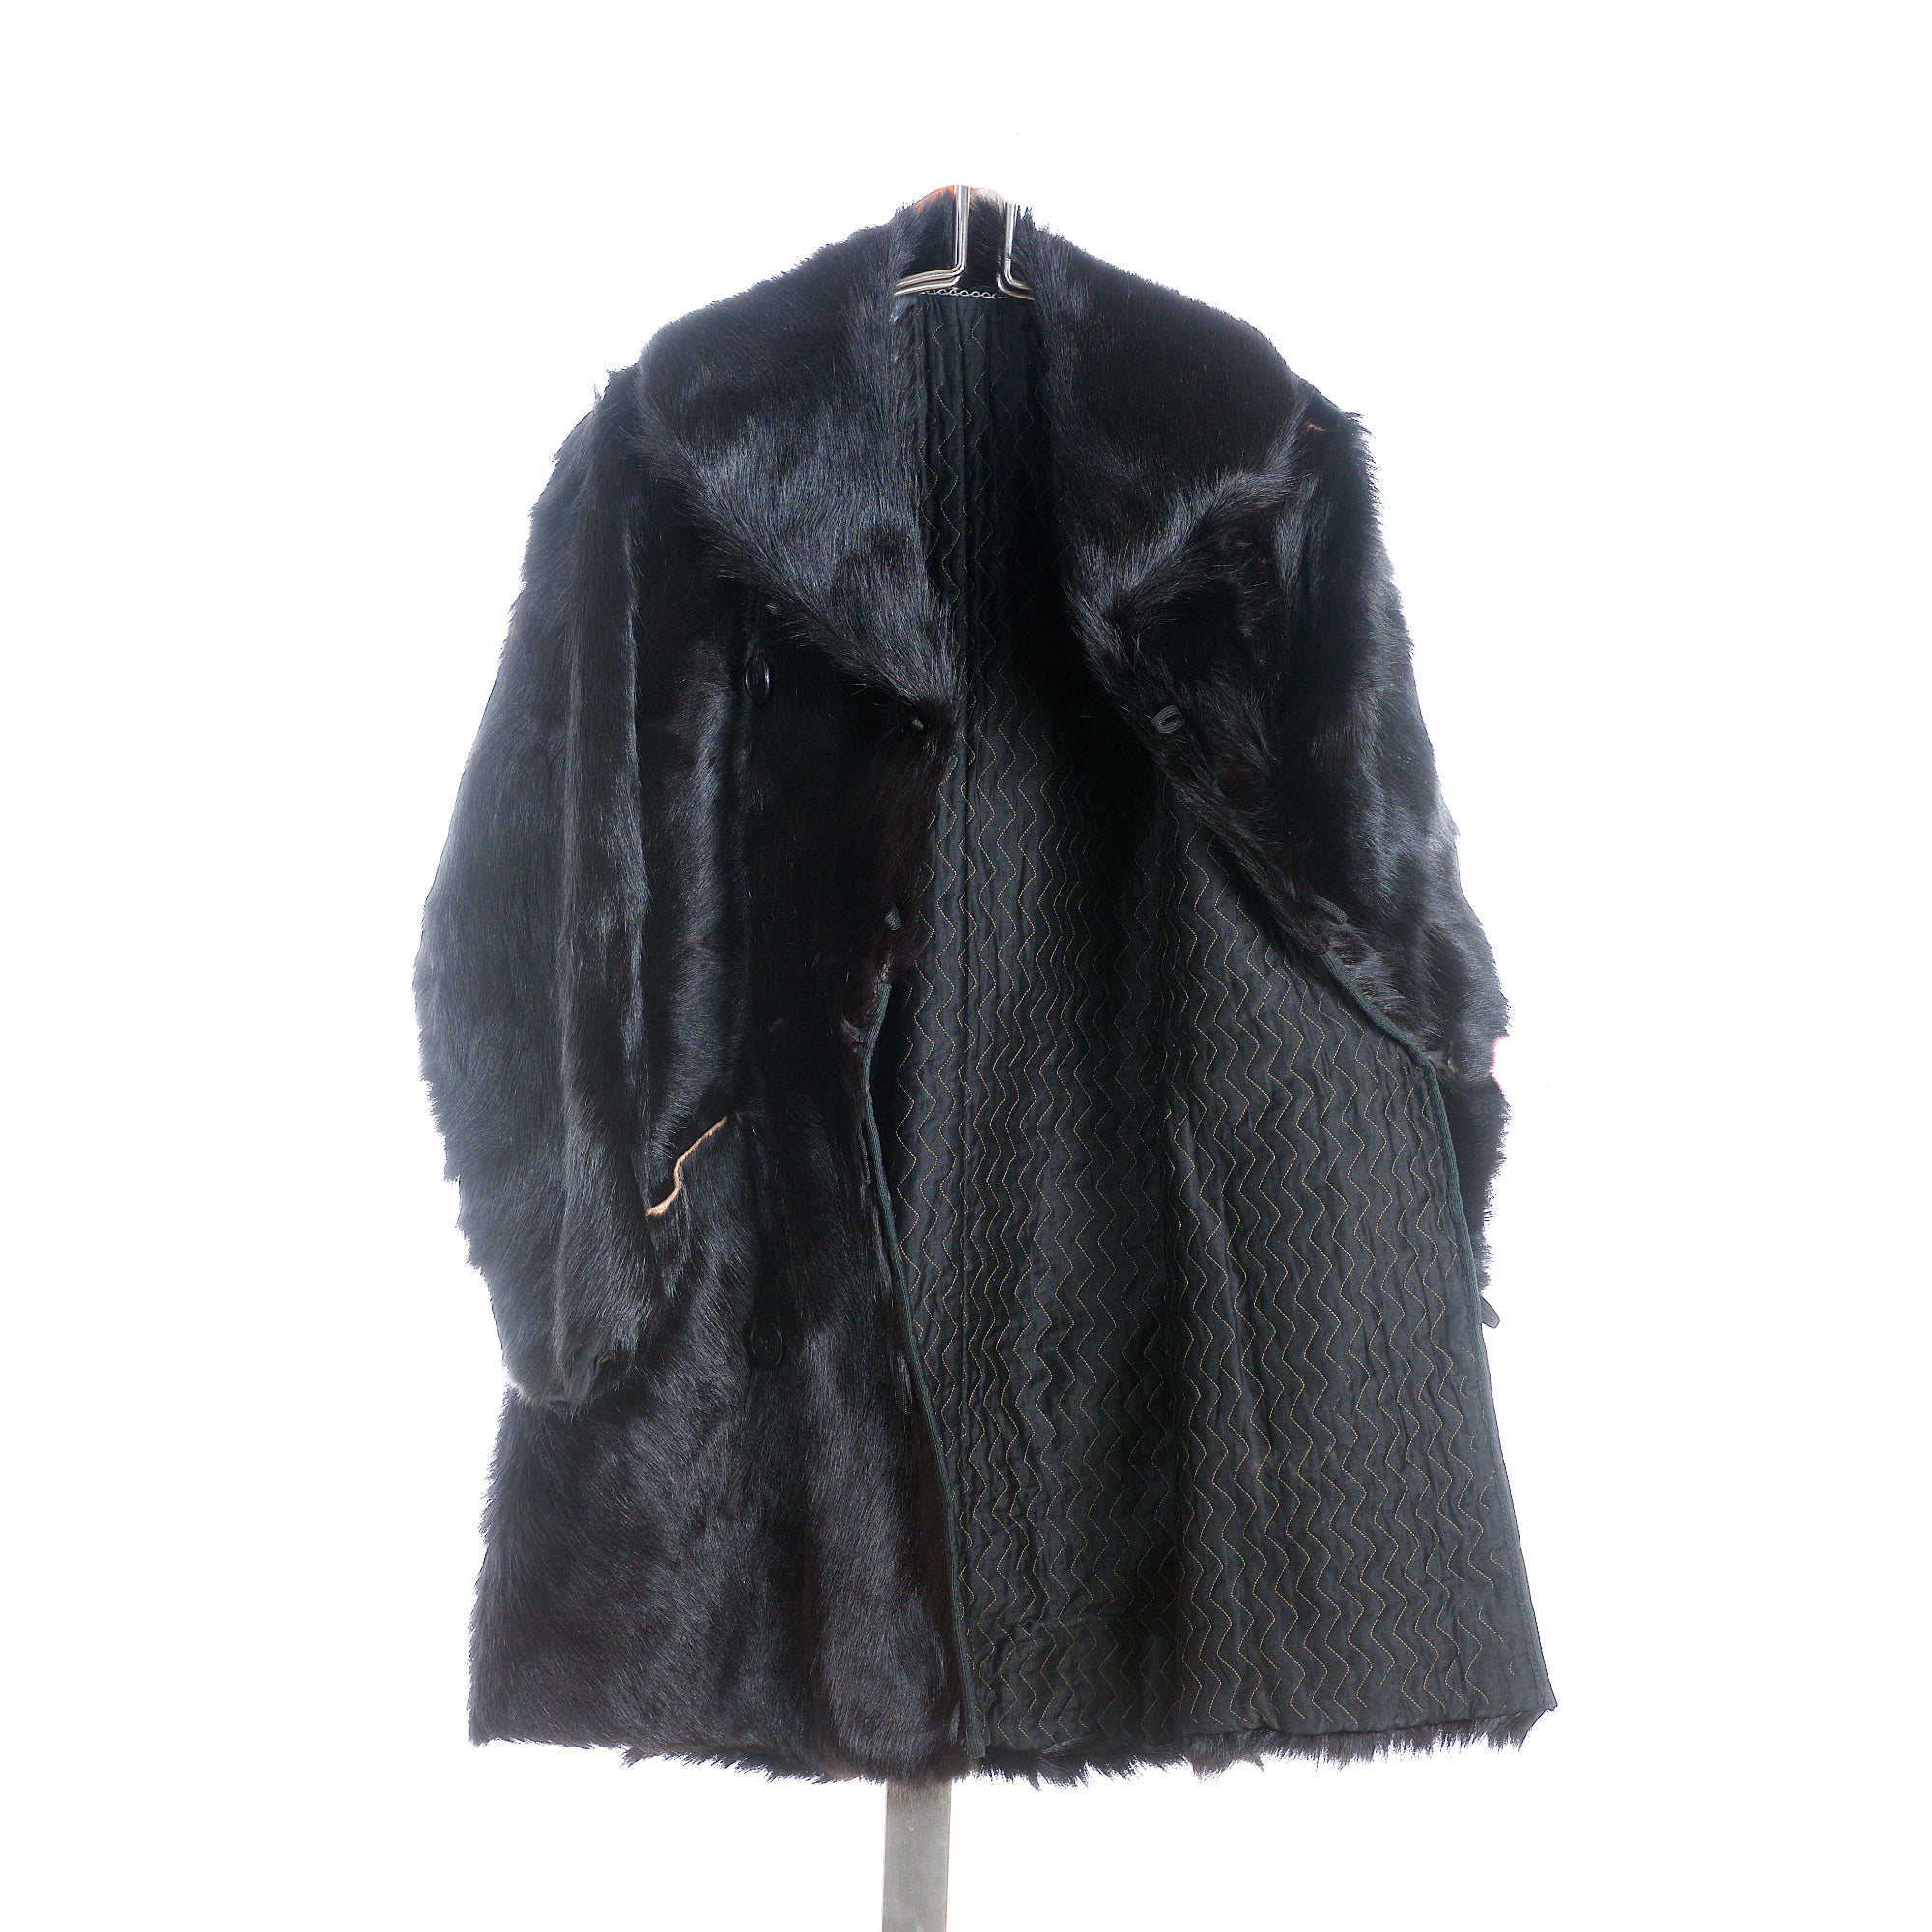 Black Bear Coat by Glover